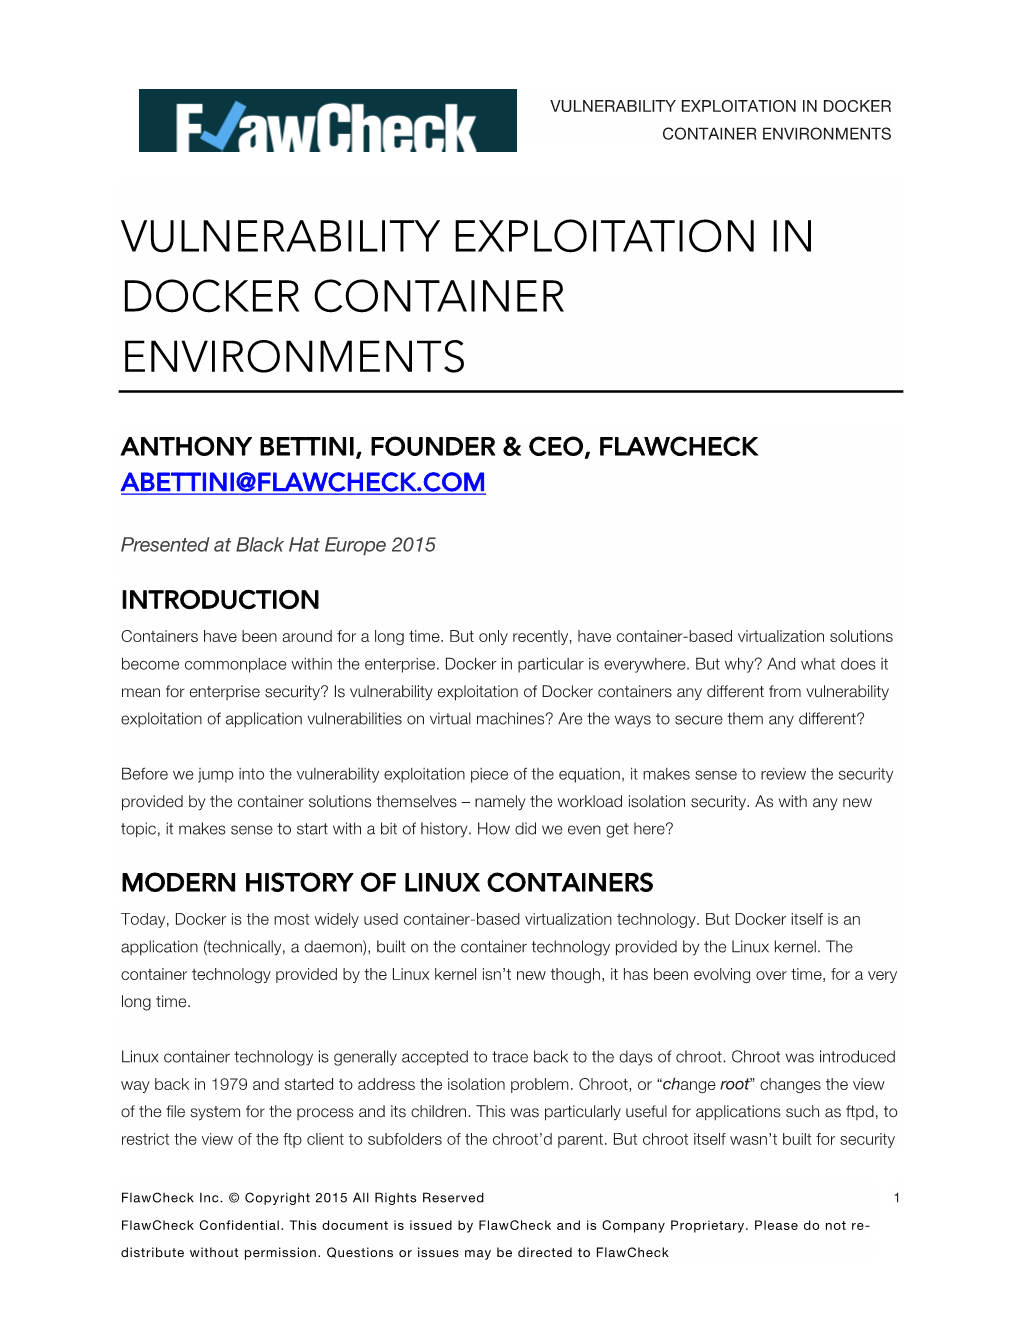 Vulnerability Exploitation in Docker Container Environments